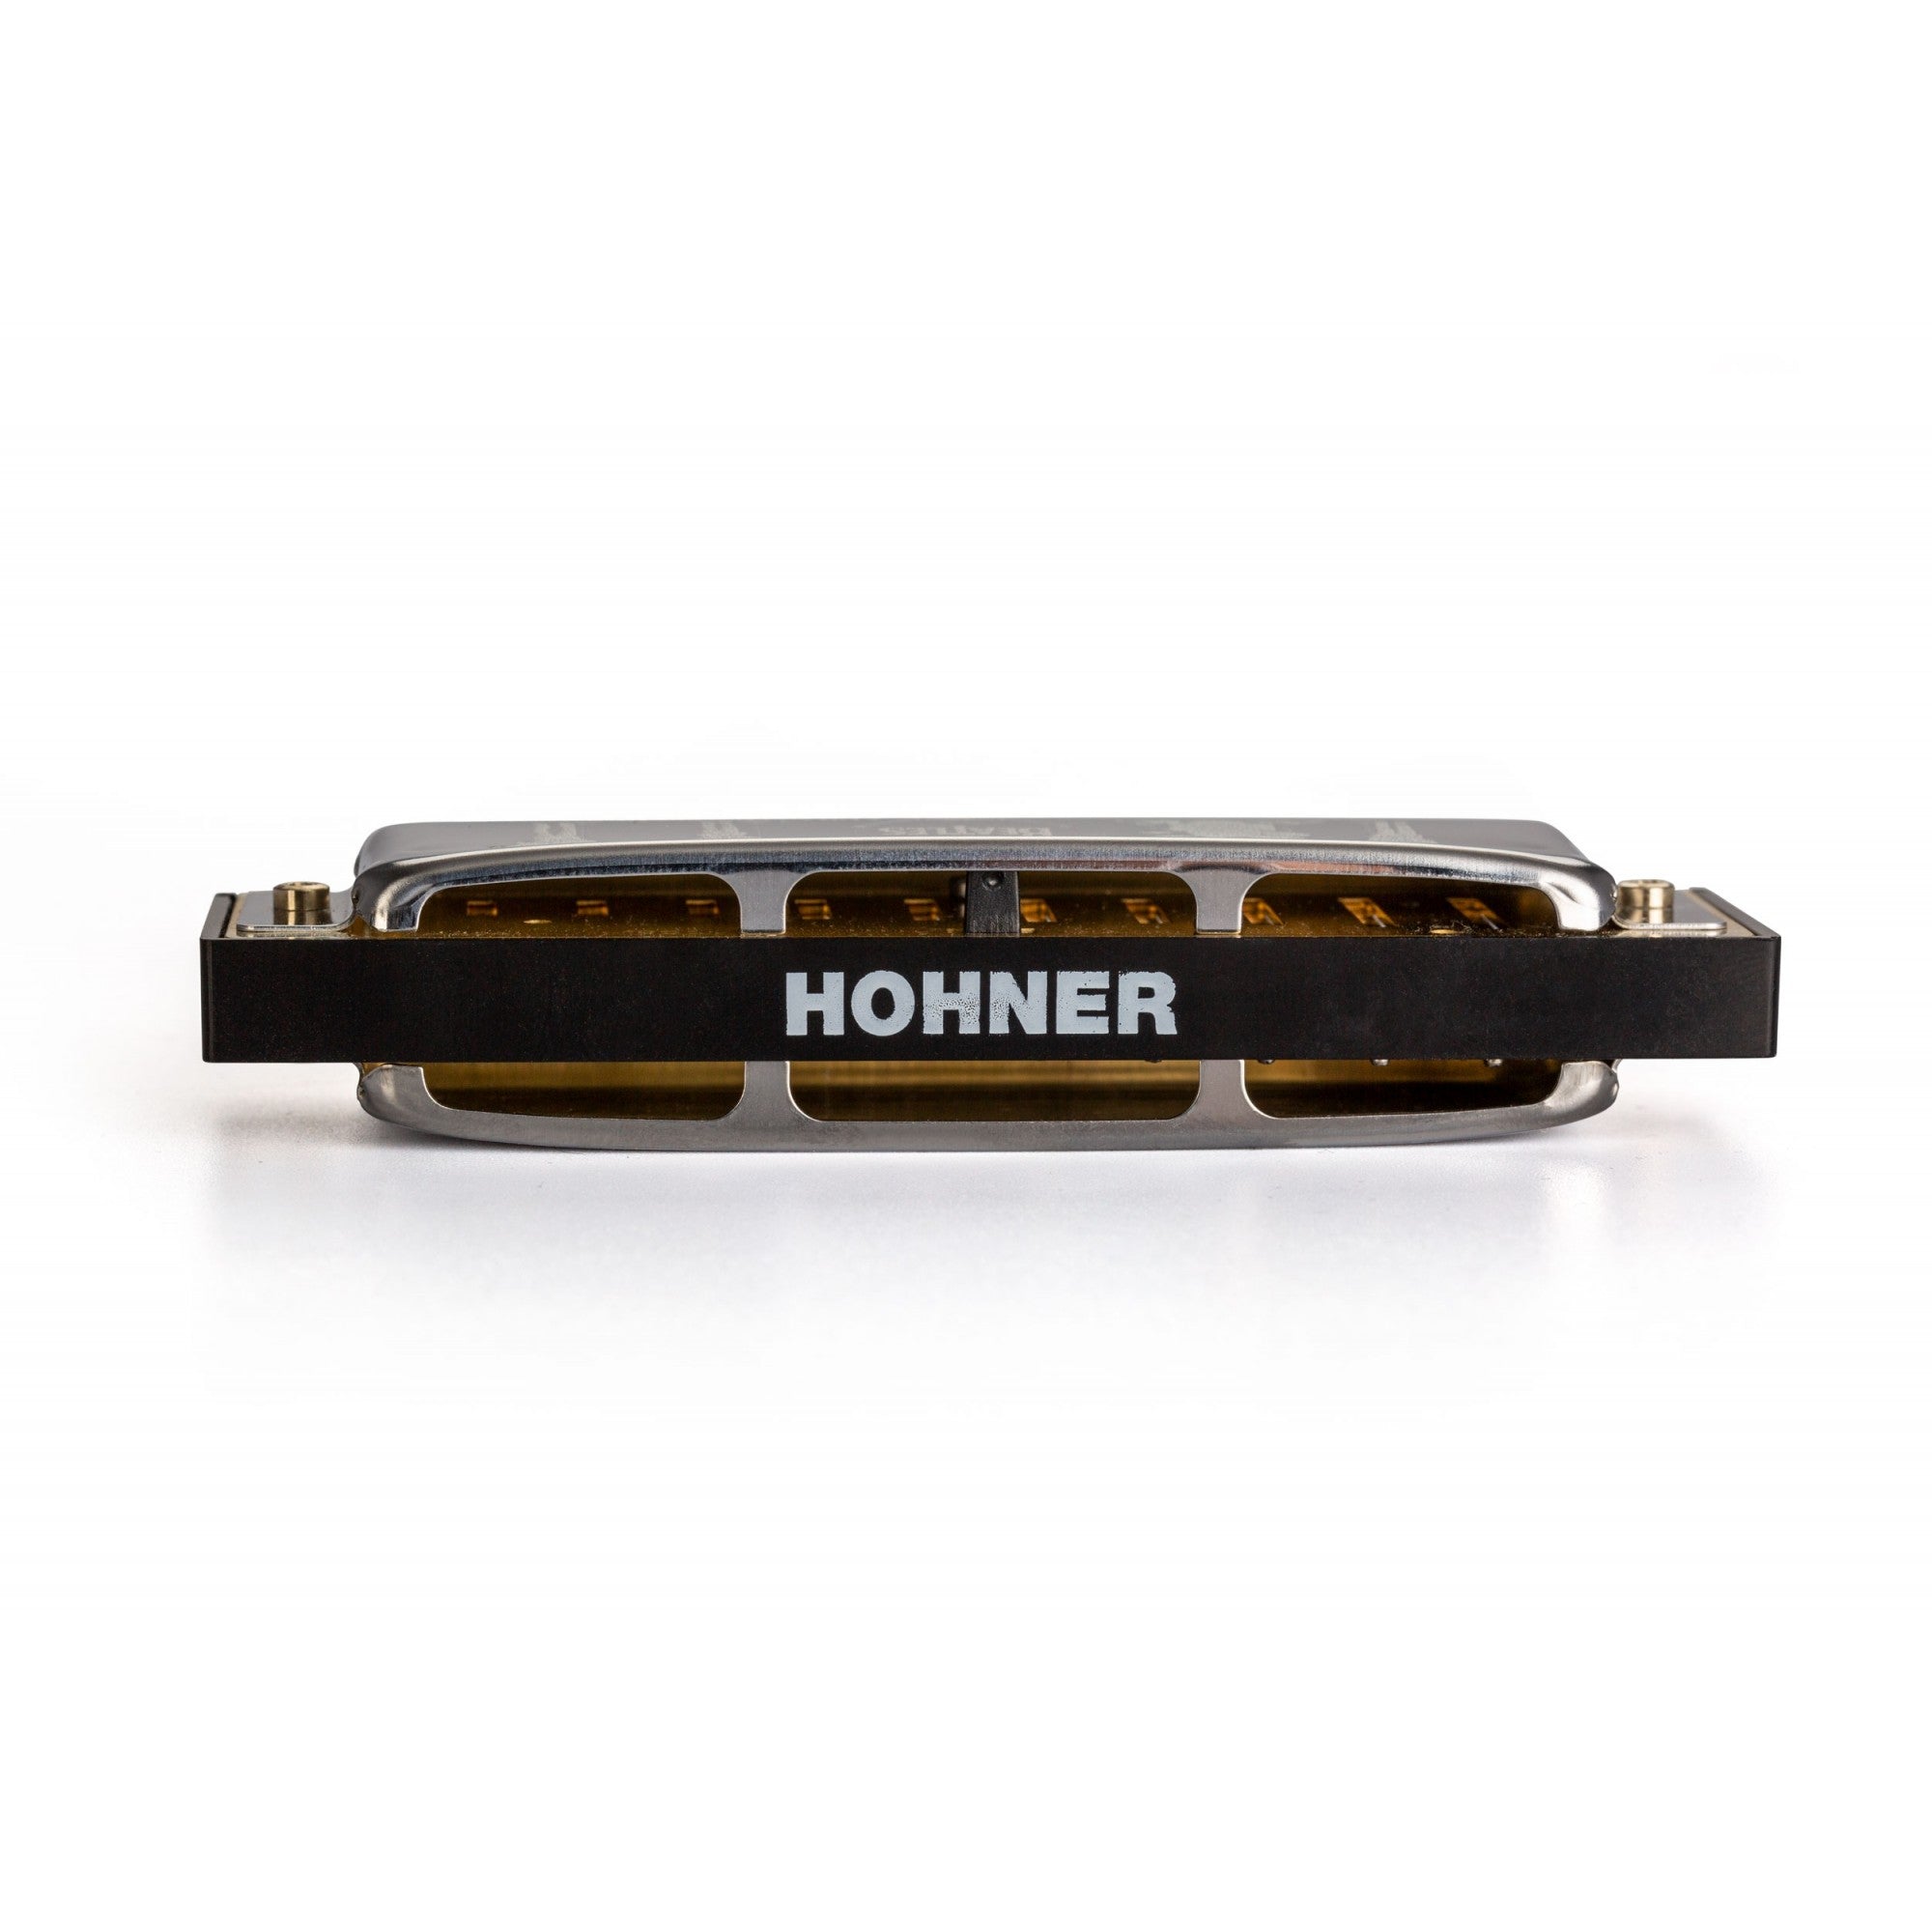 Hohner The Beatles Harmonica, Key of C